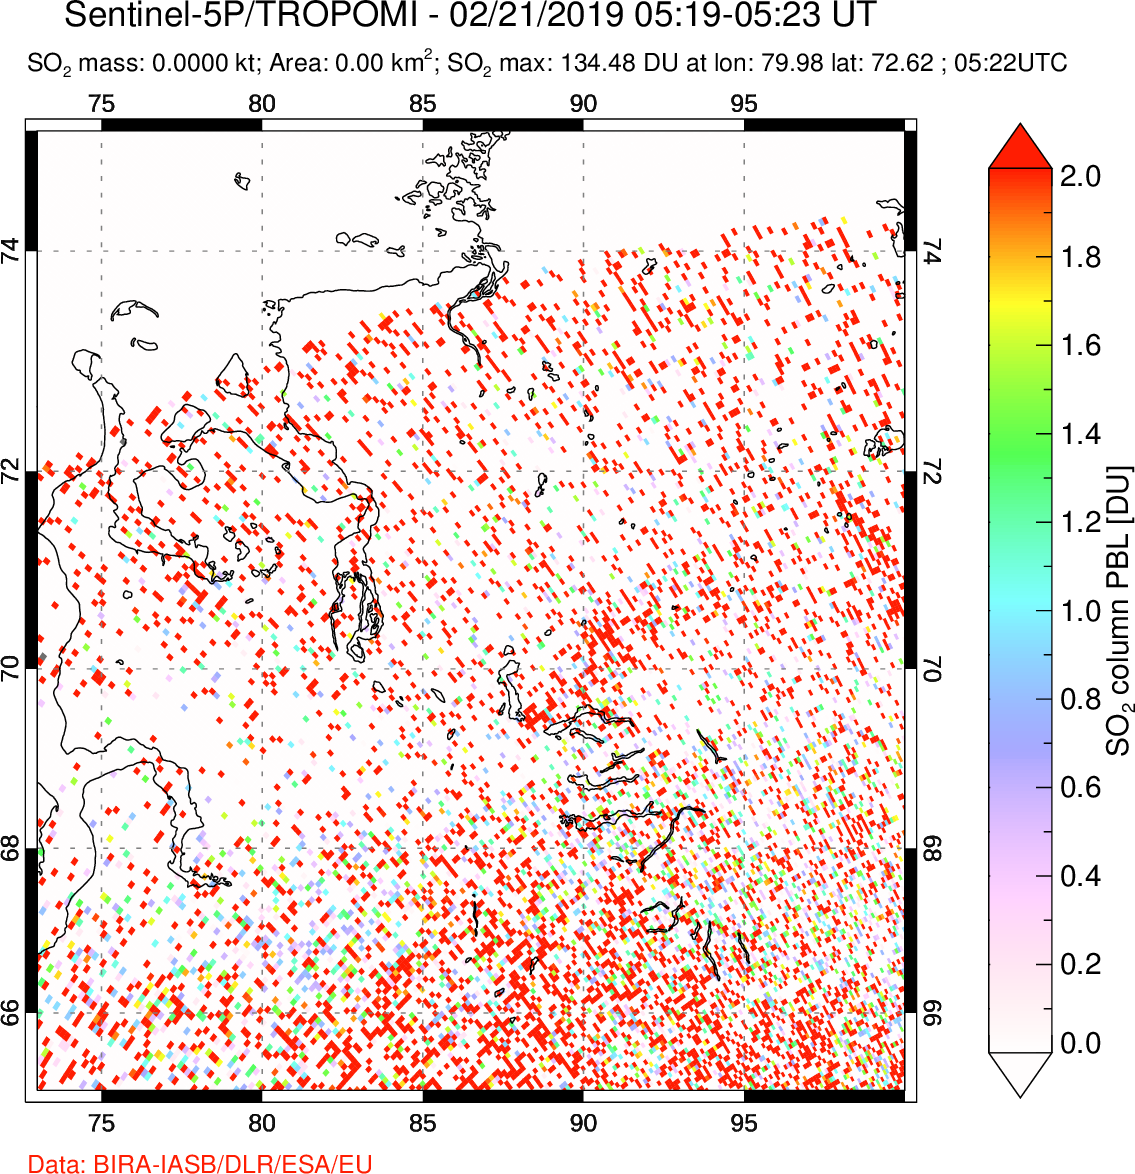 A sulfur dioxide image over Norilsk, Russian Federation on Feb 21, 2019.